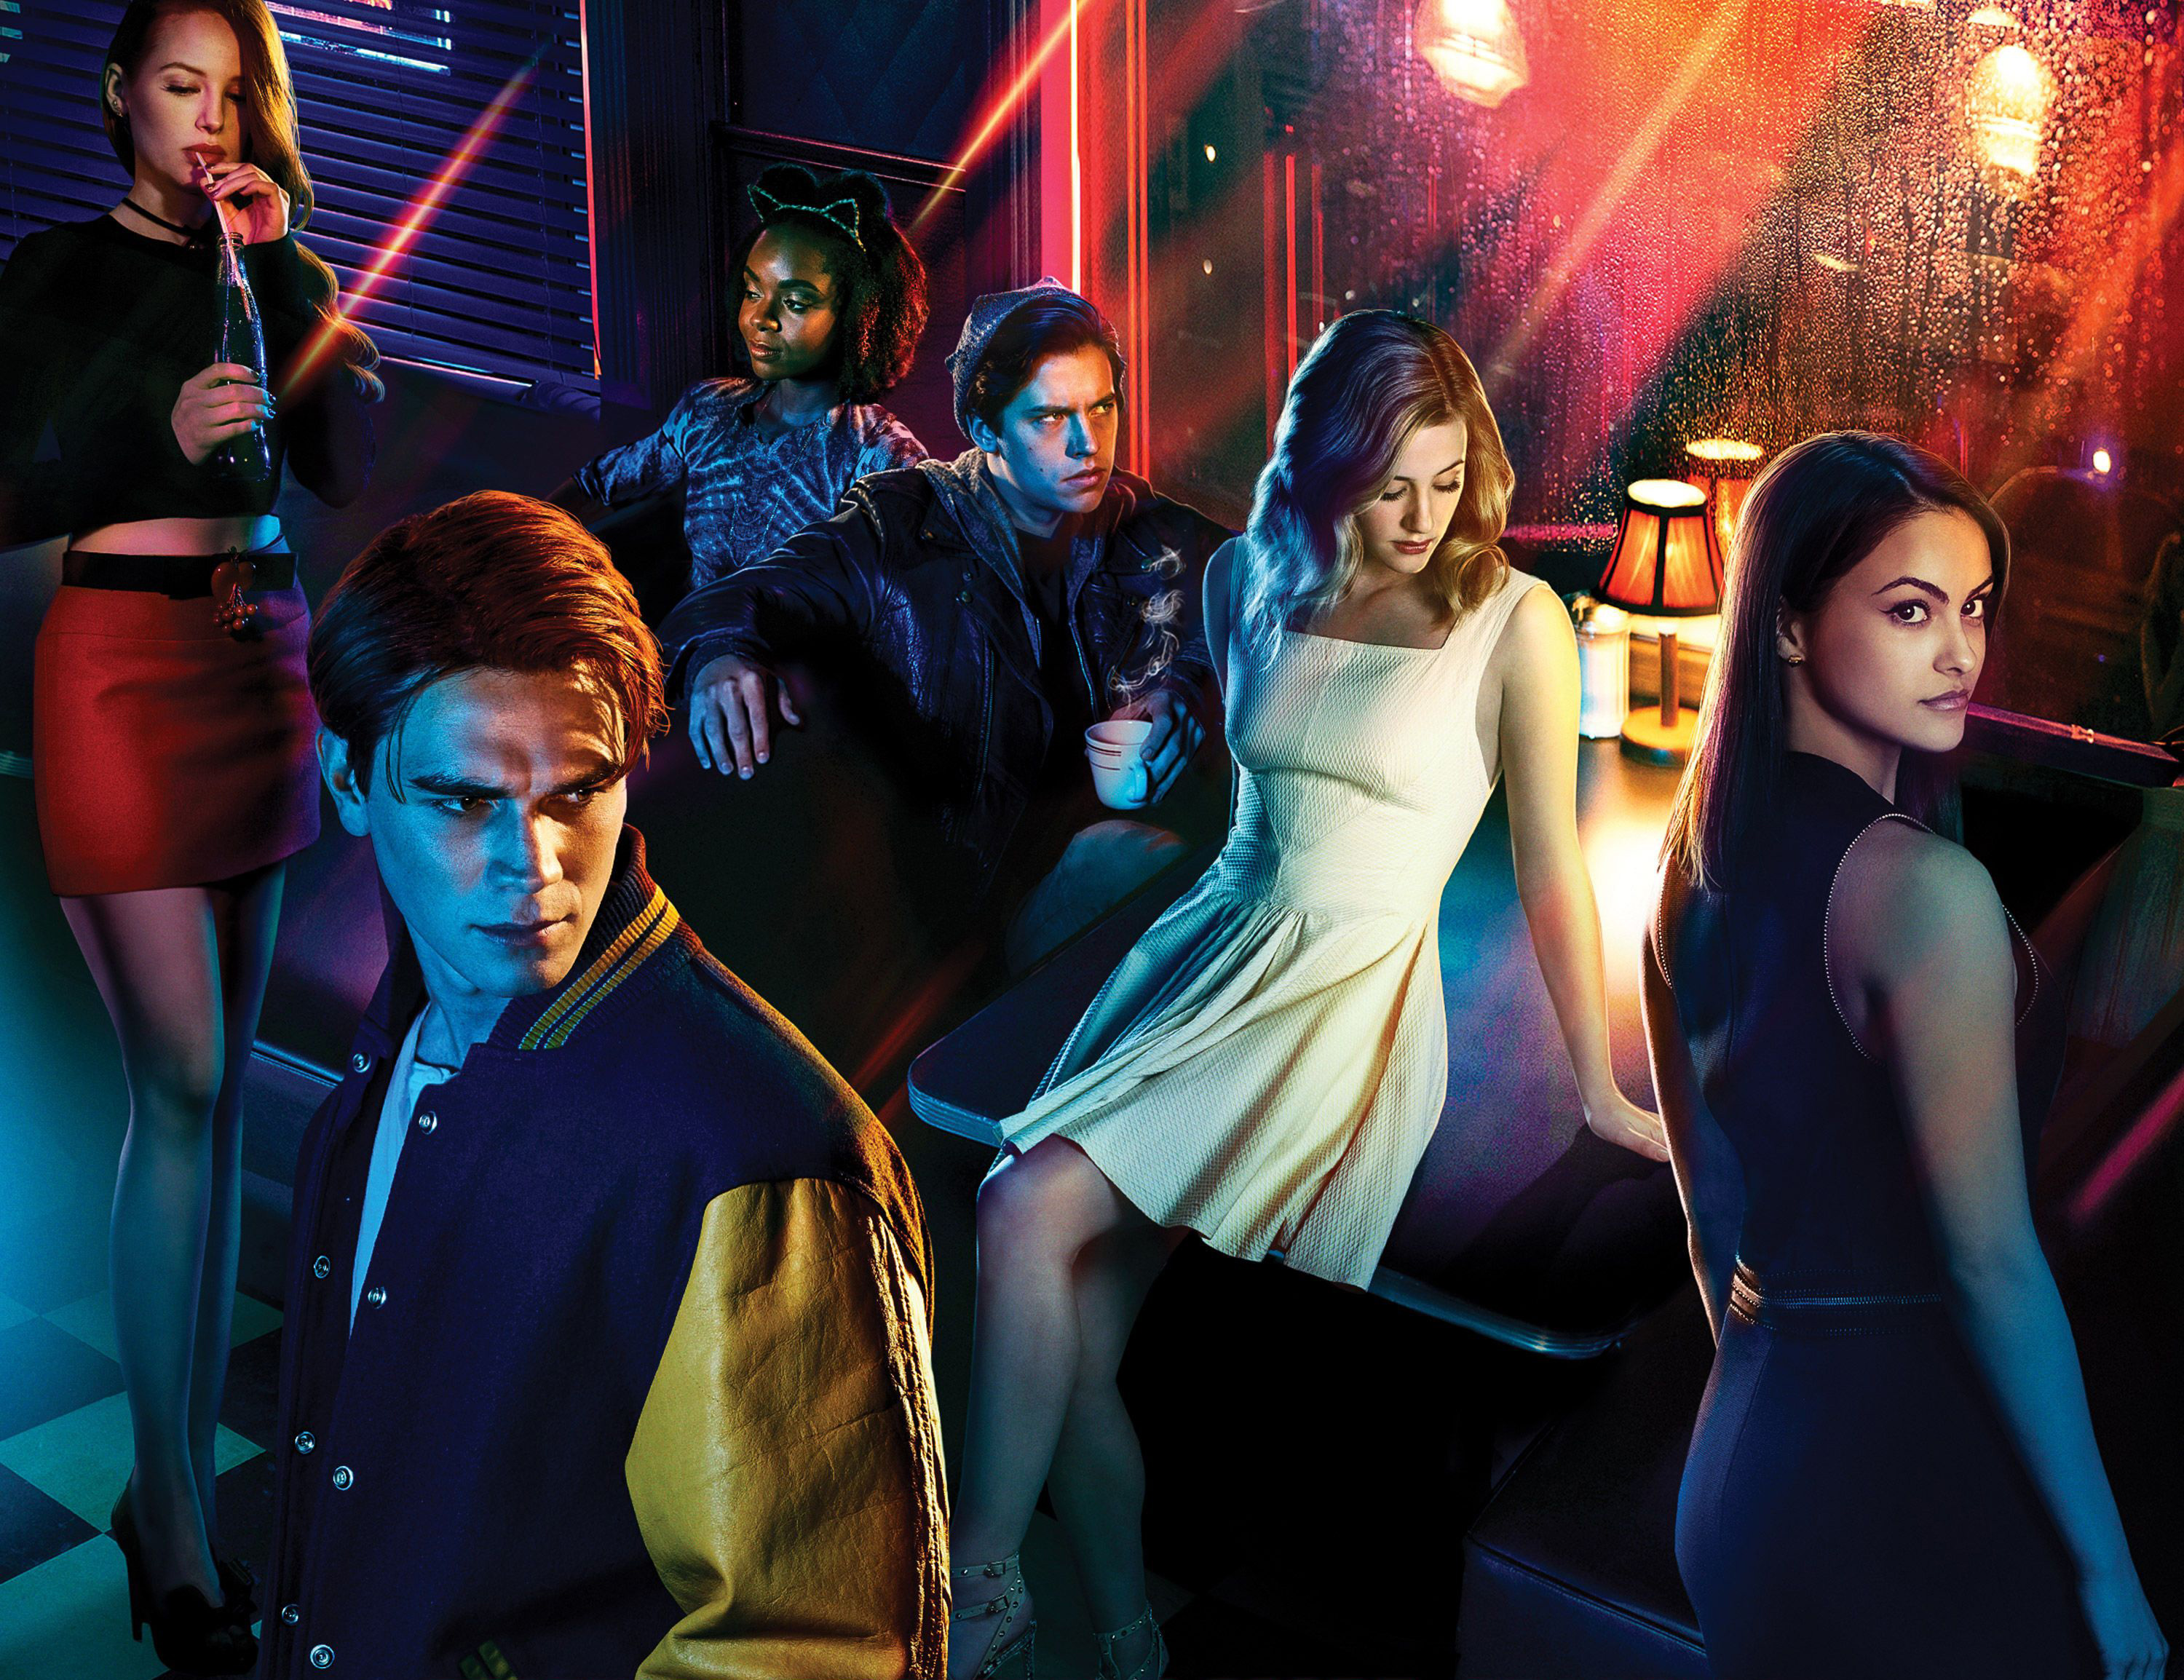 TV Show Riverdale HD Wallpaper | Background Image